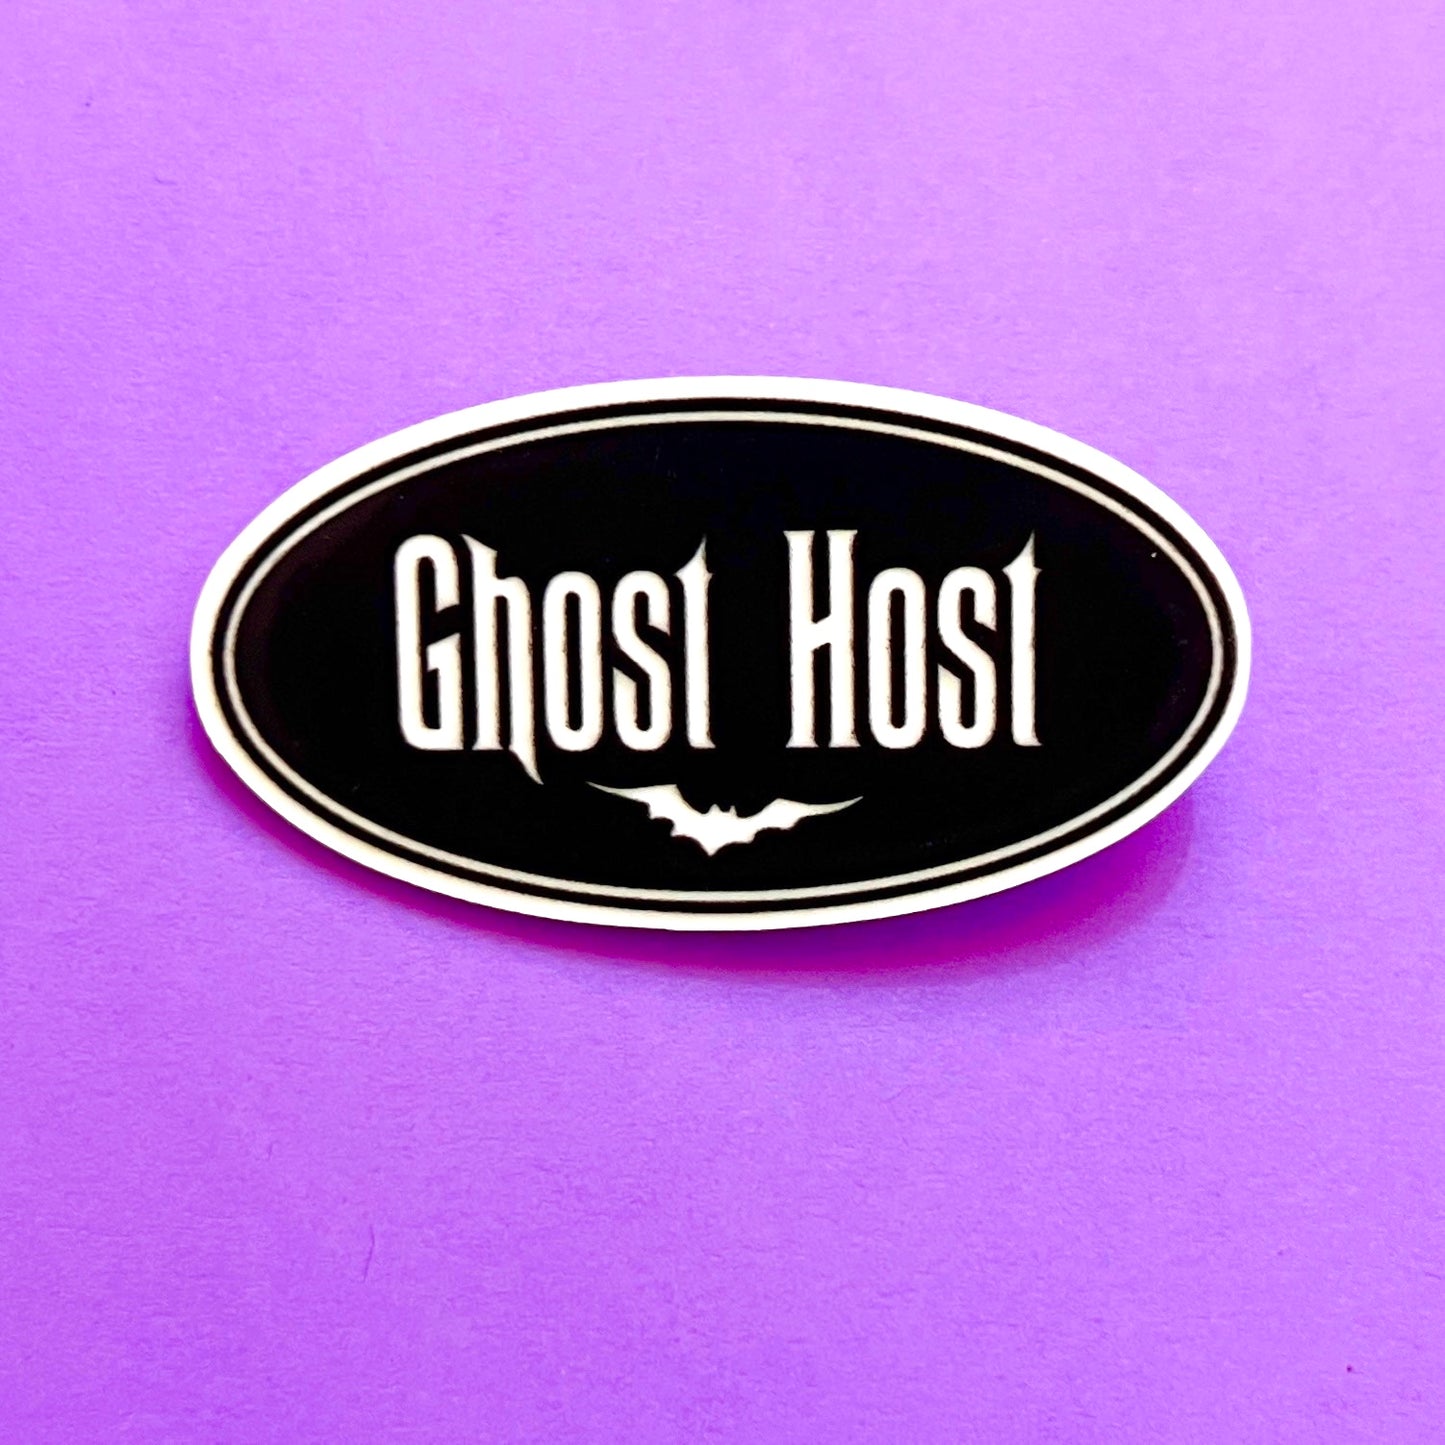 Ghost Host Acrylic Brooch Pin